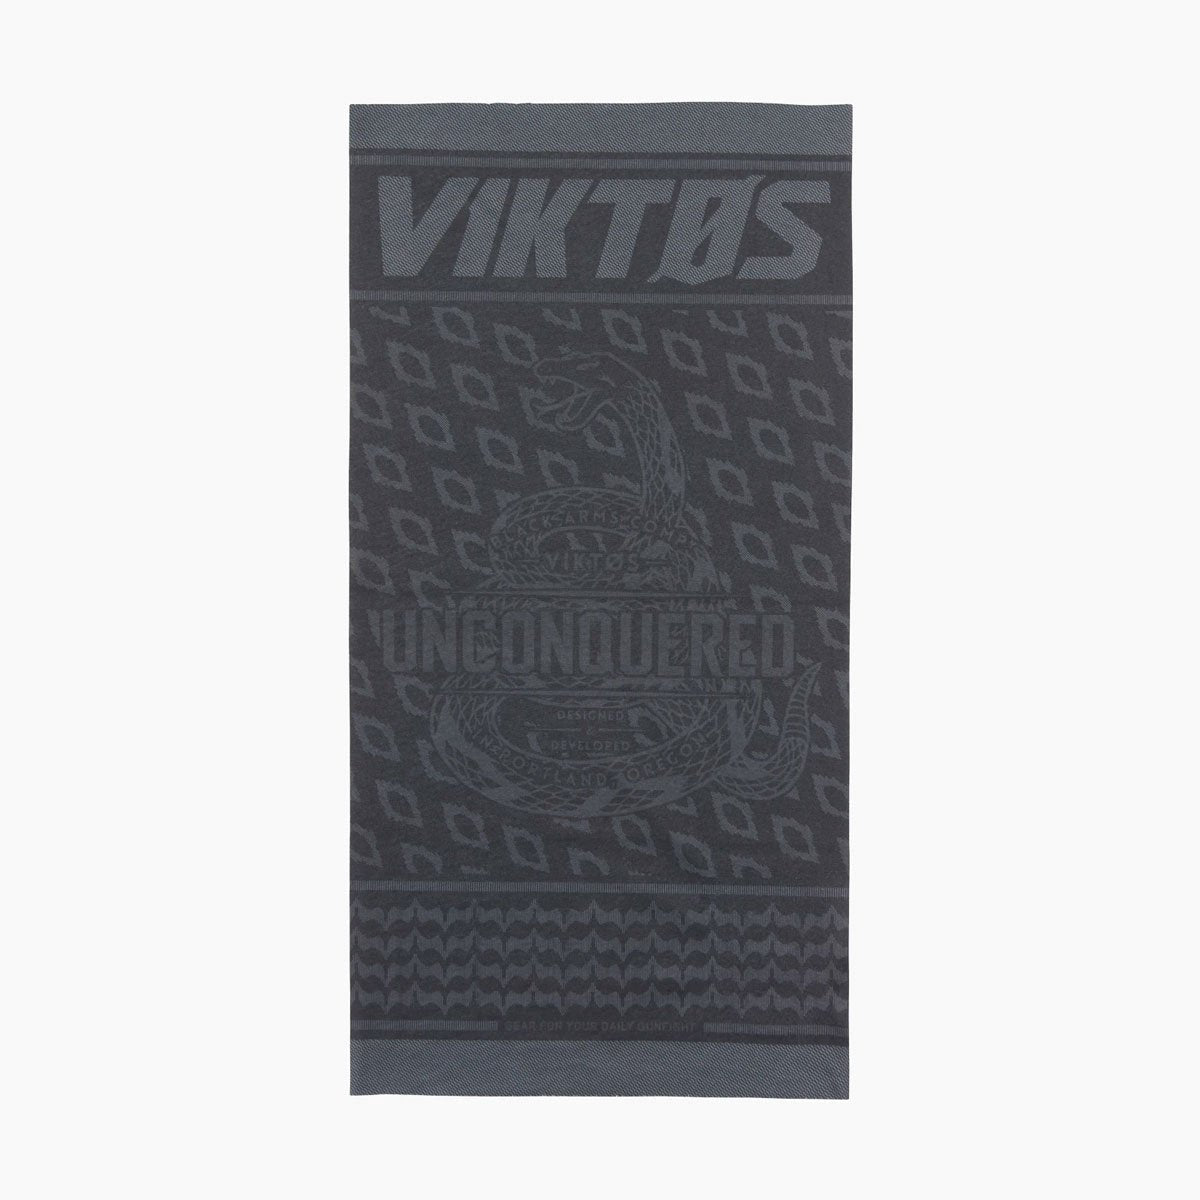 VIKTOS Adaptable Unconquered Face Mask Accessories VIKTOS Tactical Gear Supplier Tactical Distributors Australia